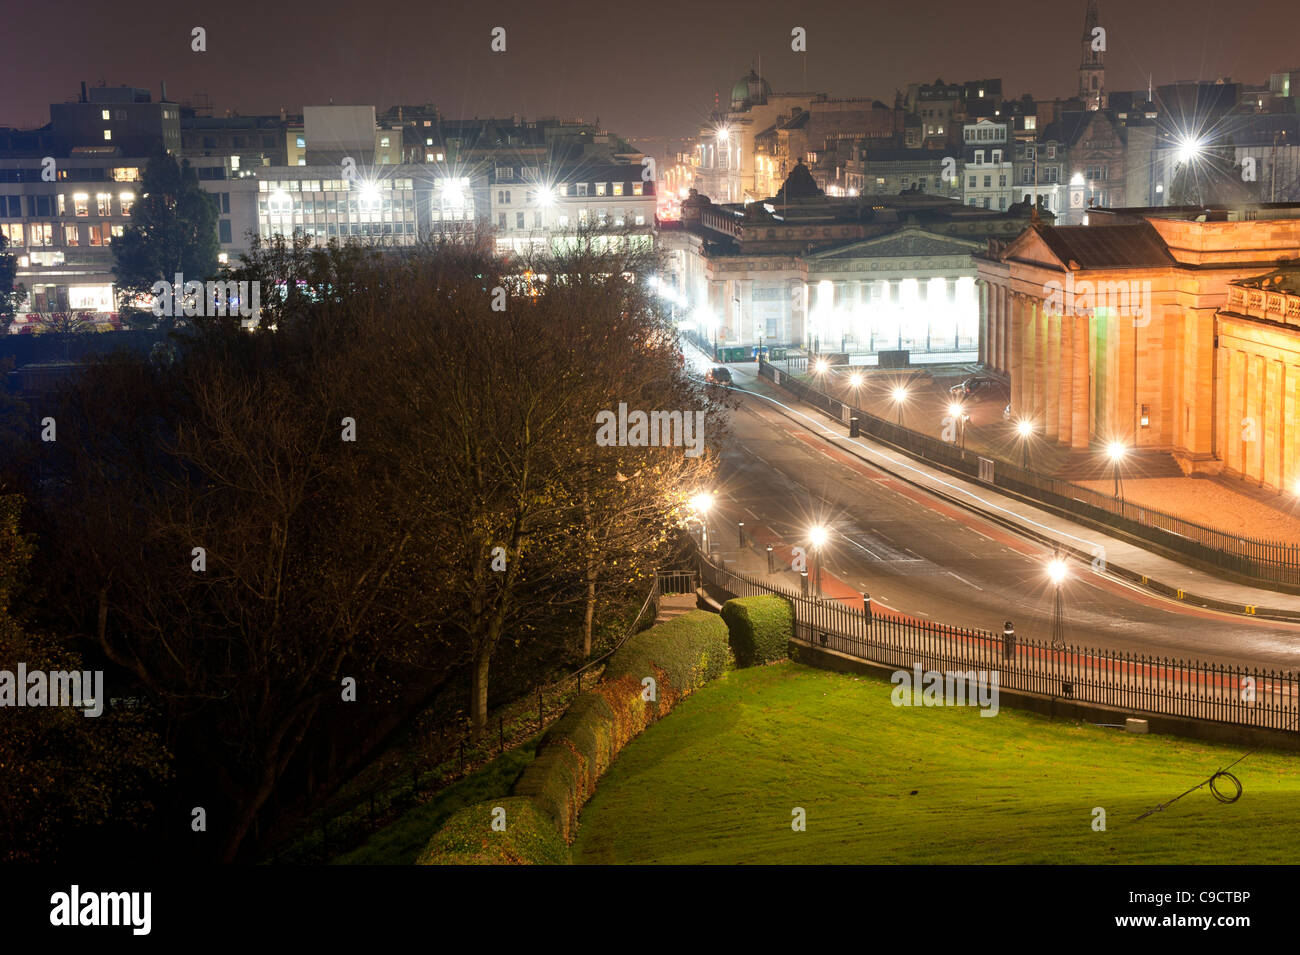 View of Edinburgh at night taken from Mound Place near Edinburgh Castle. Stock Photo